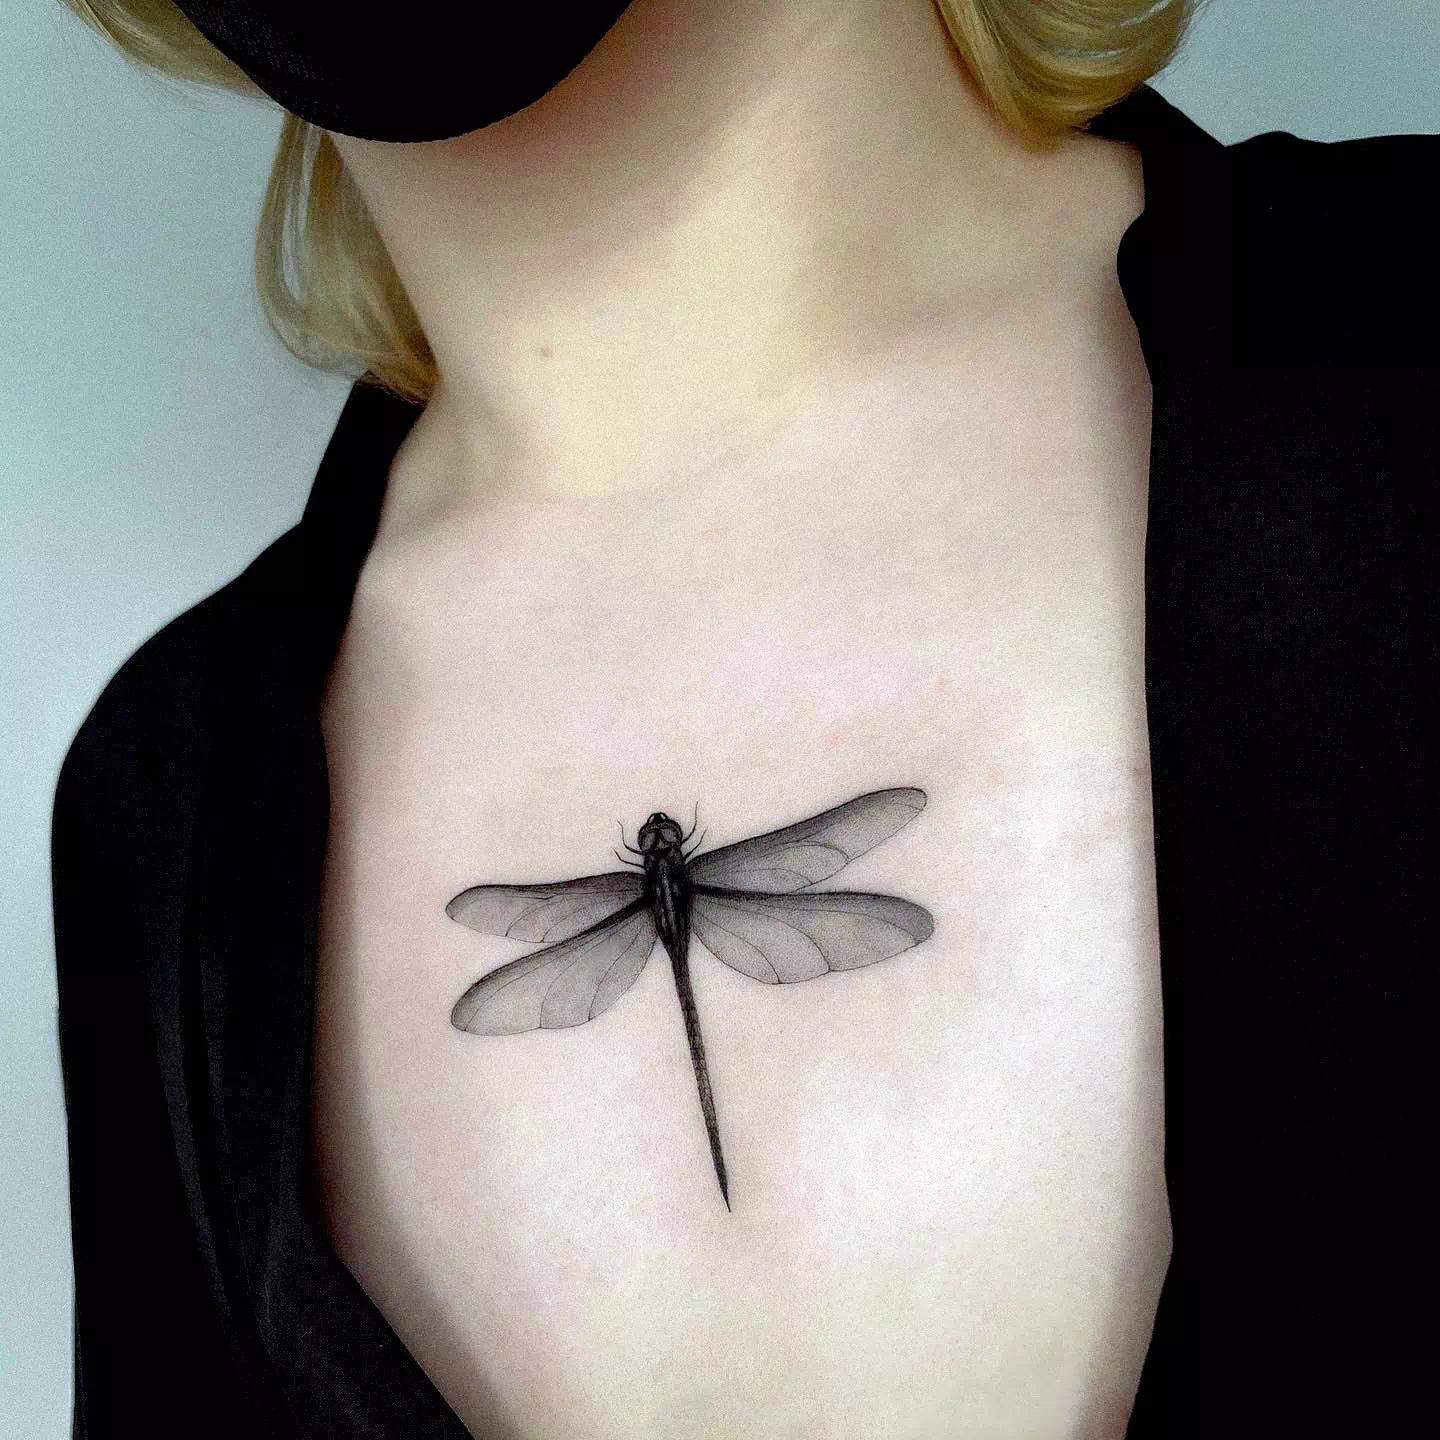 Tatuaje de una libélula negra